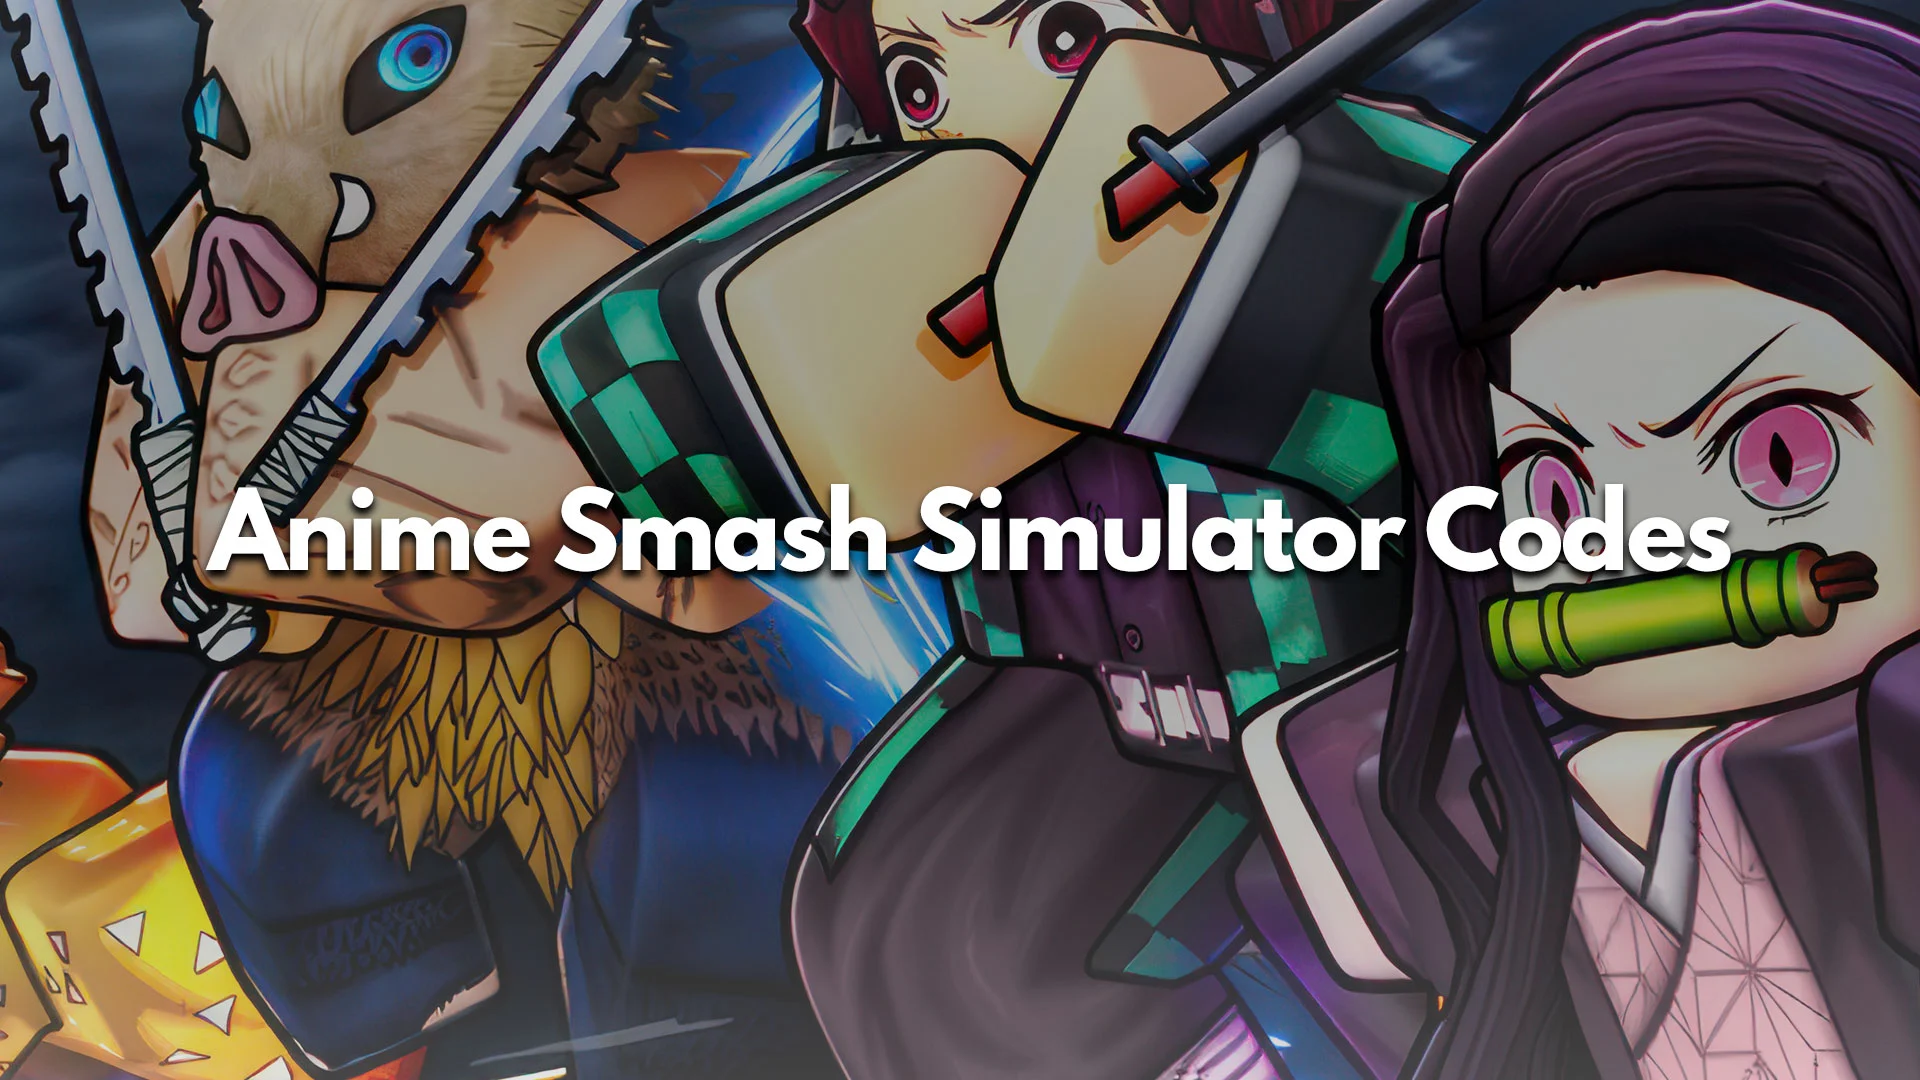 Building Smash Simulator Codes